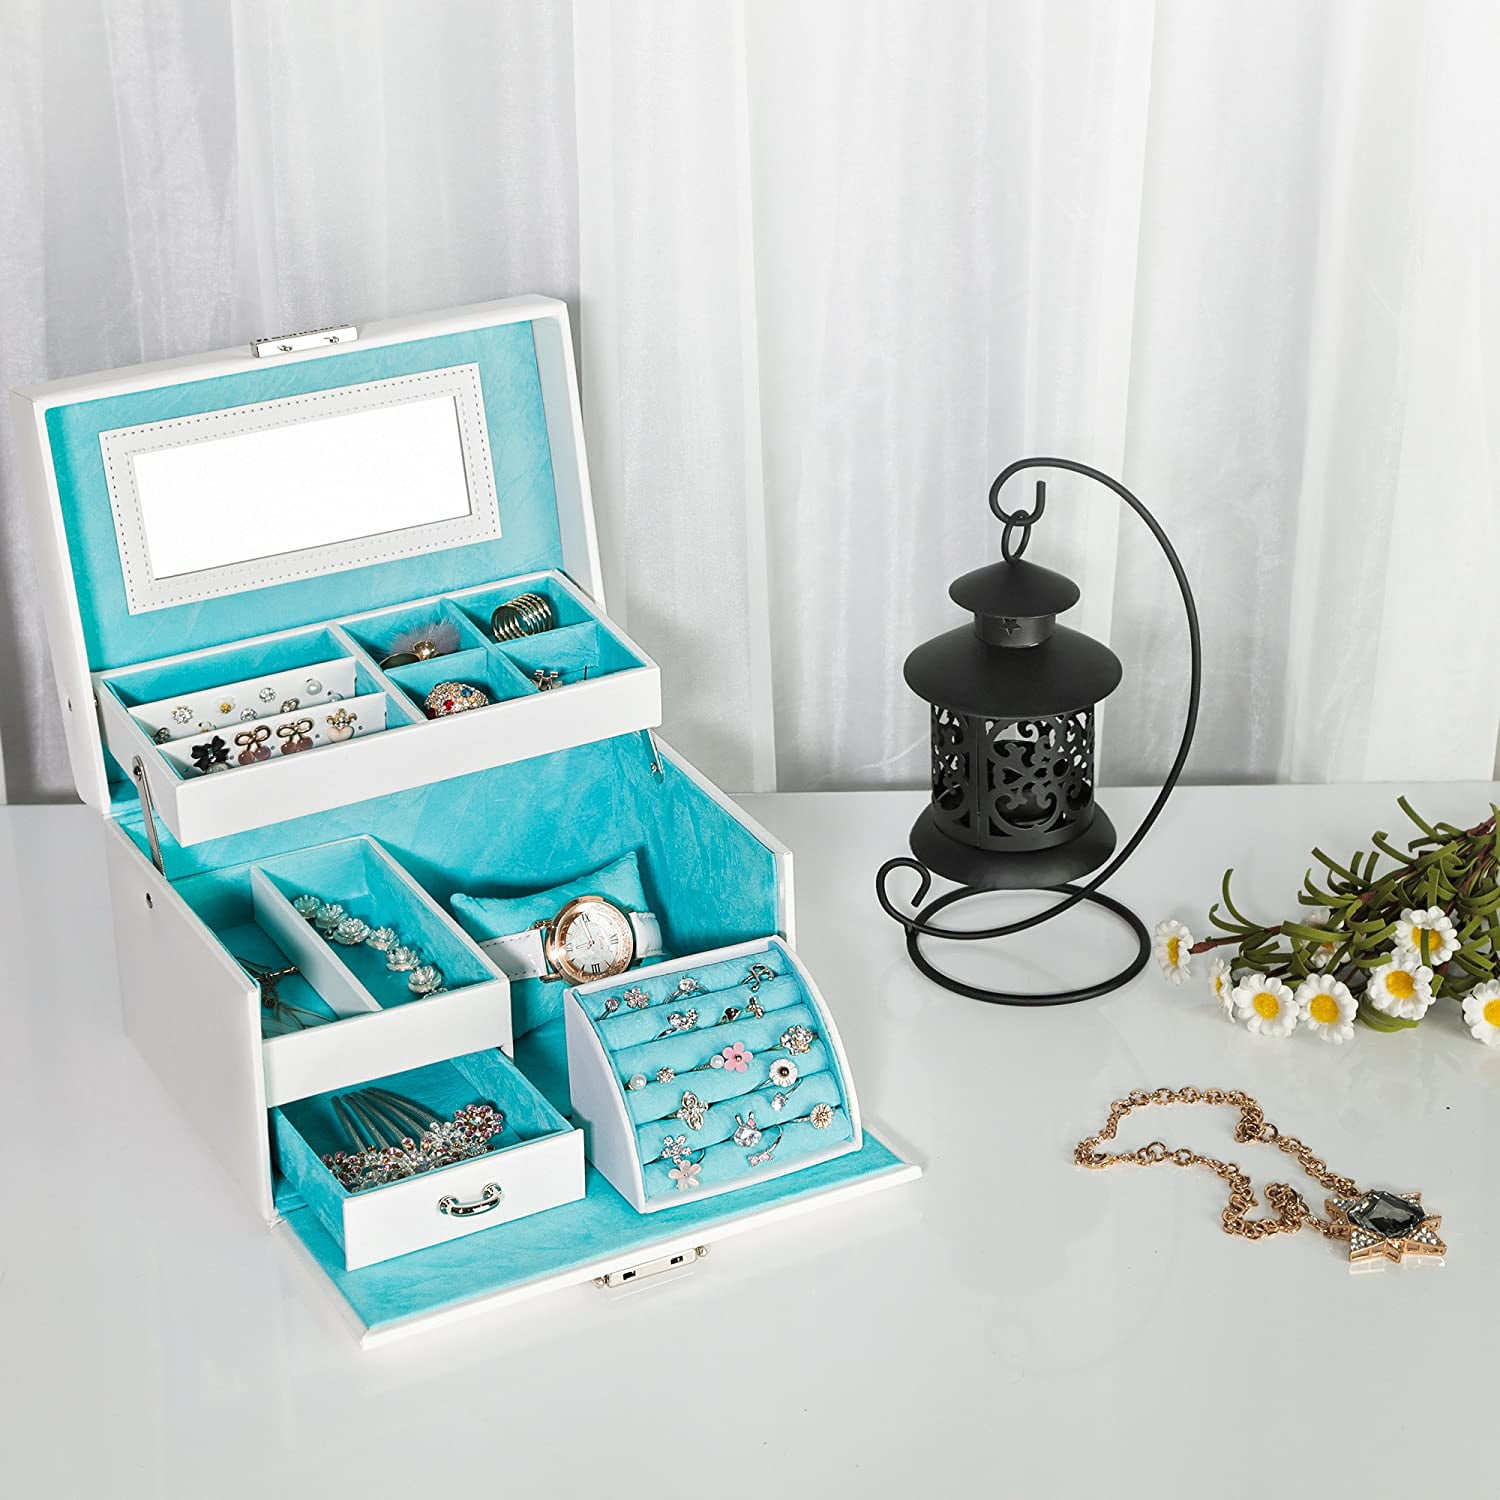 jewelry organizer The jewelry pouch is a great gift idea for women Jewelry storage pouch